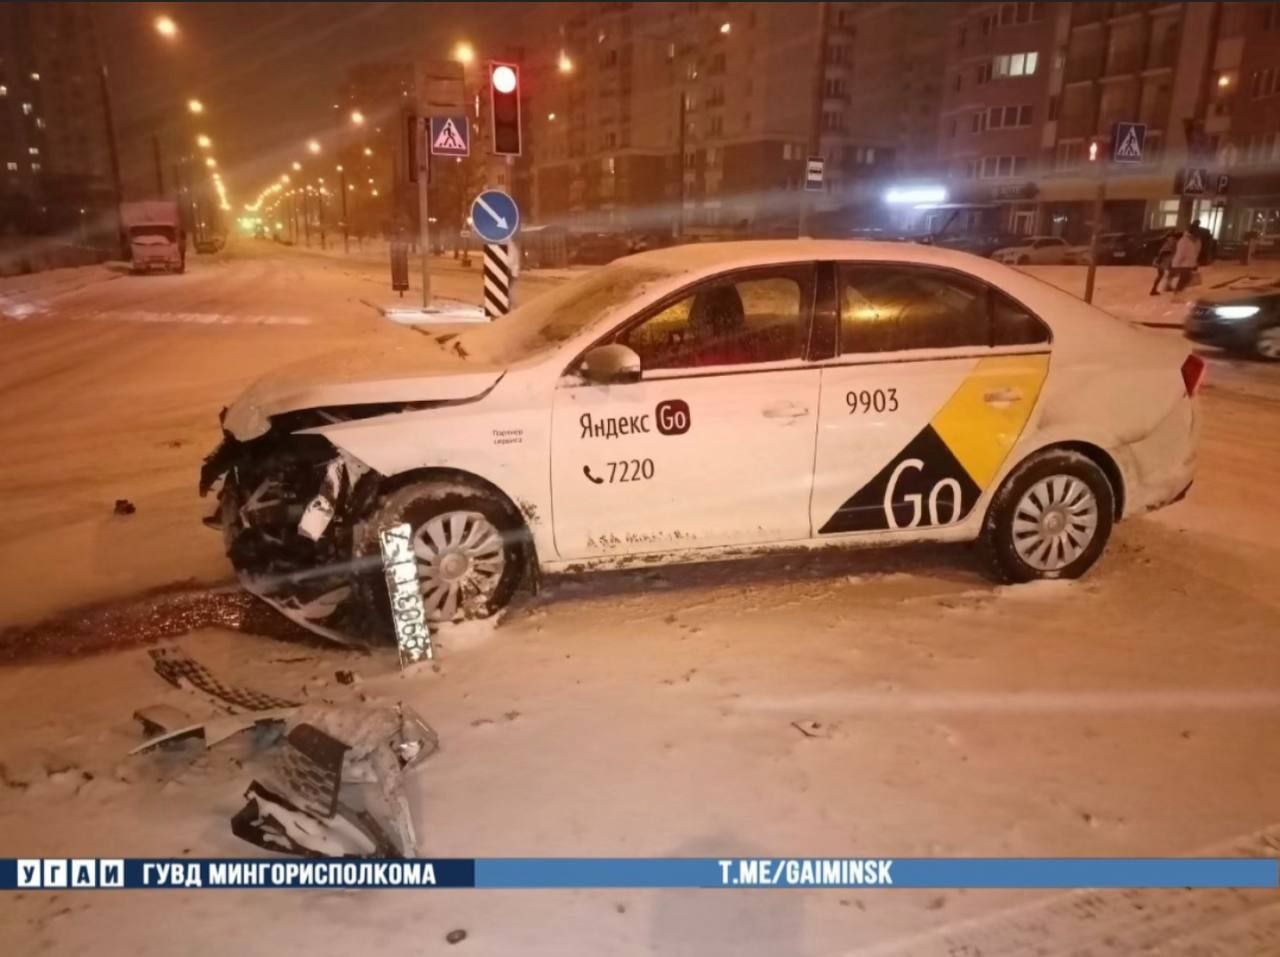 Две аварии с такси произошли в Минске. Пострадал пассажир